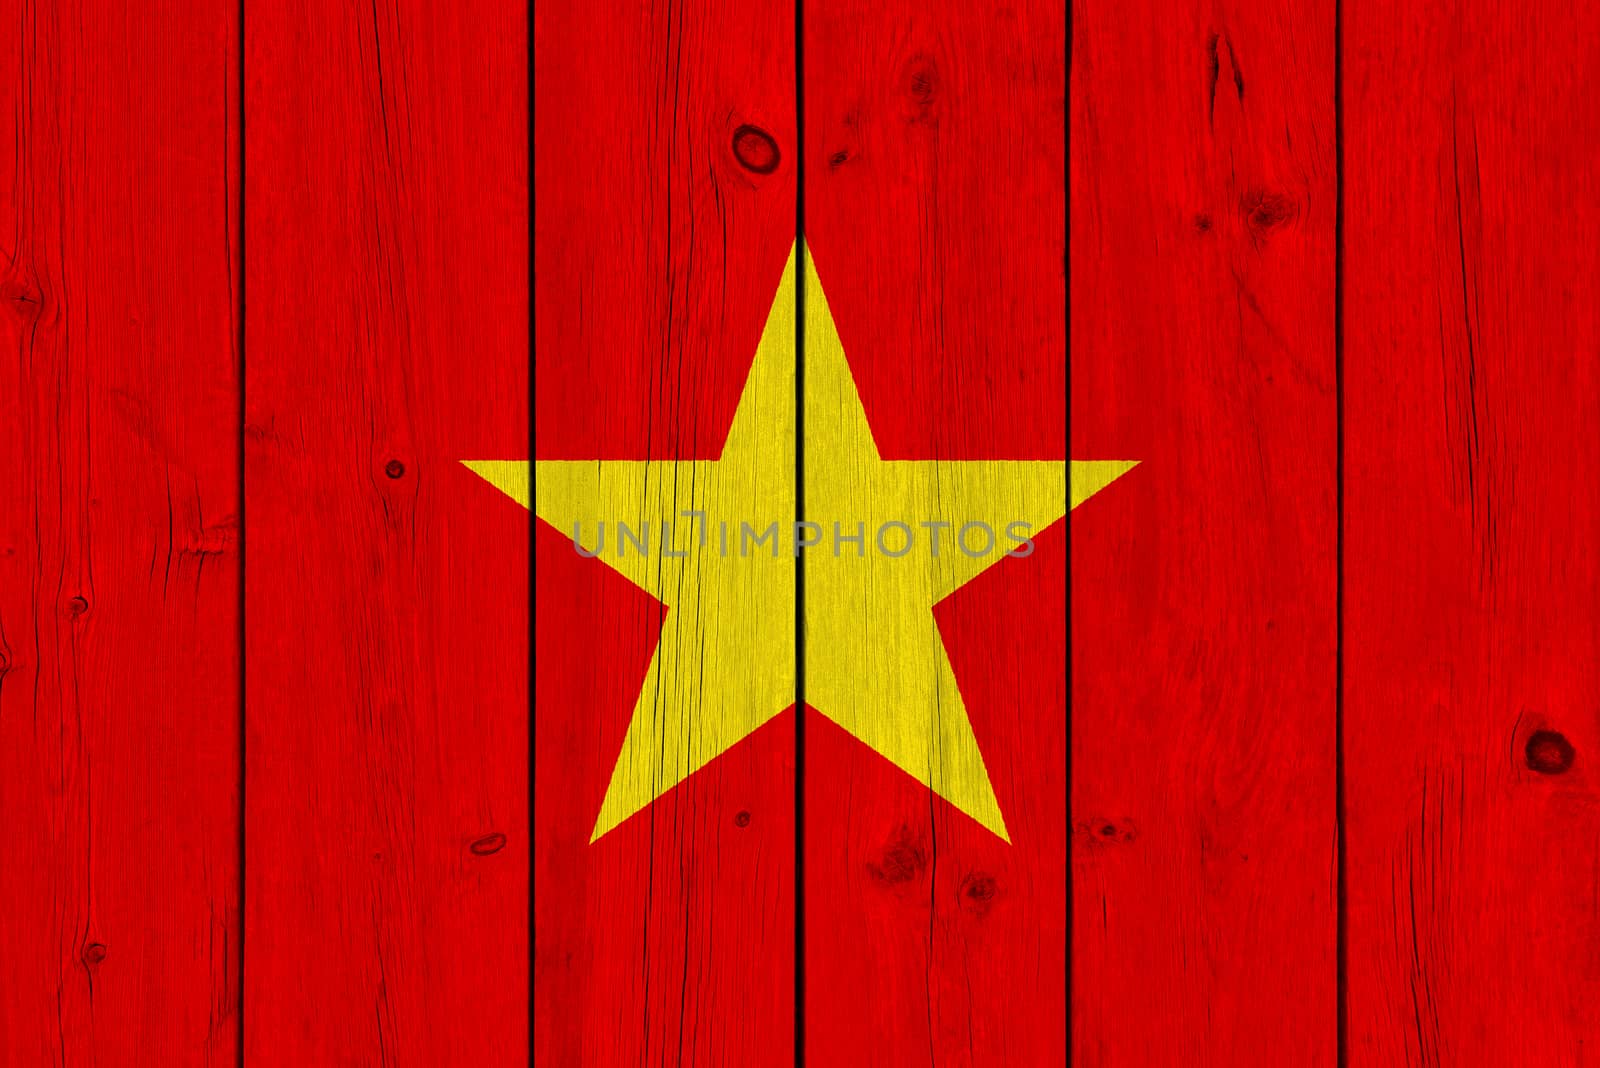 Vietnam flag painted on old wood plank. Patriotic background. National flag of Vietnam